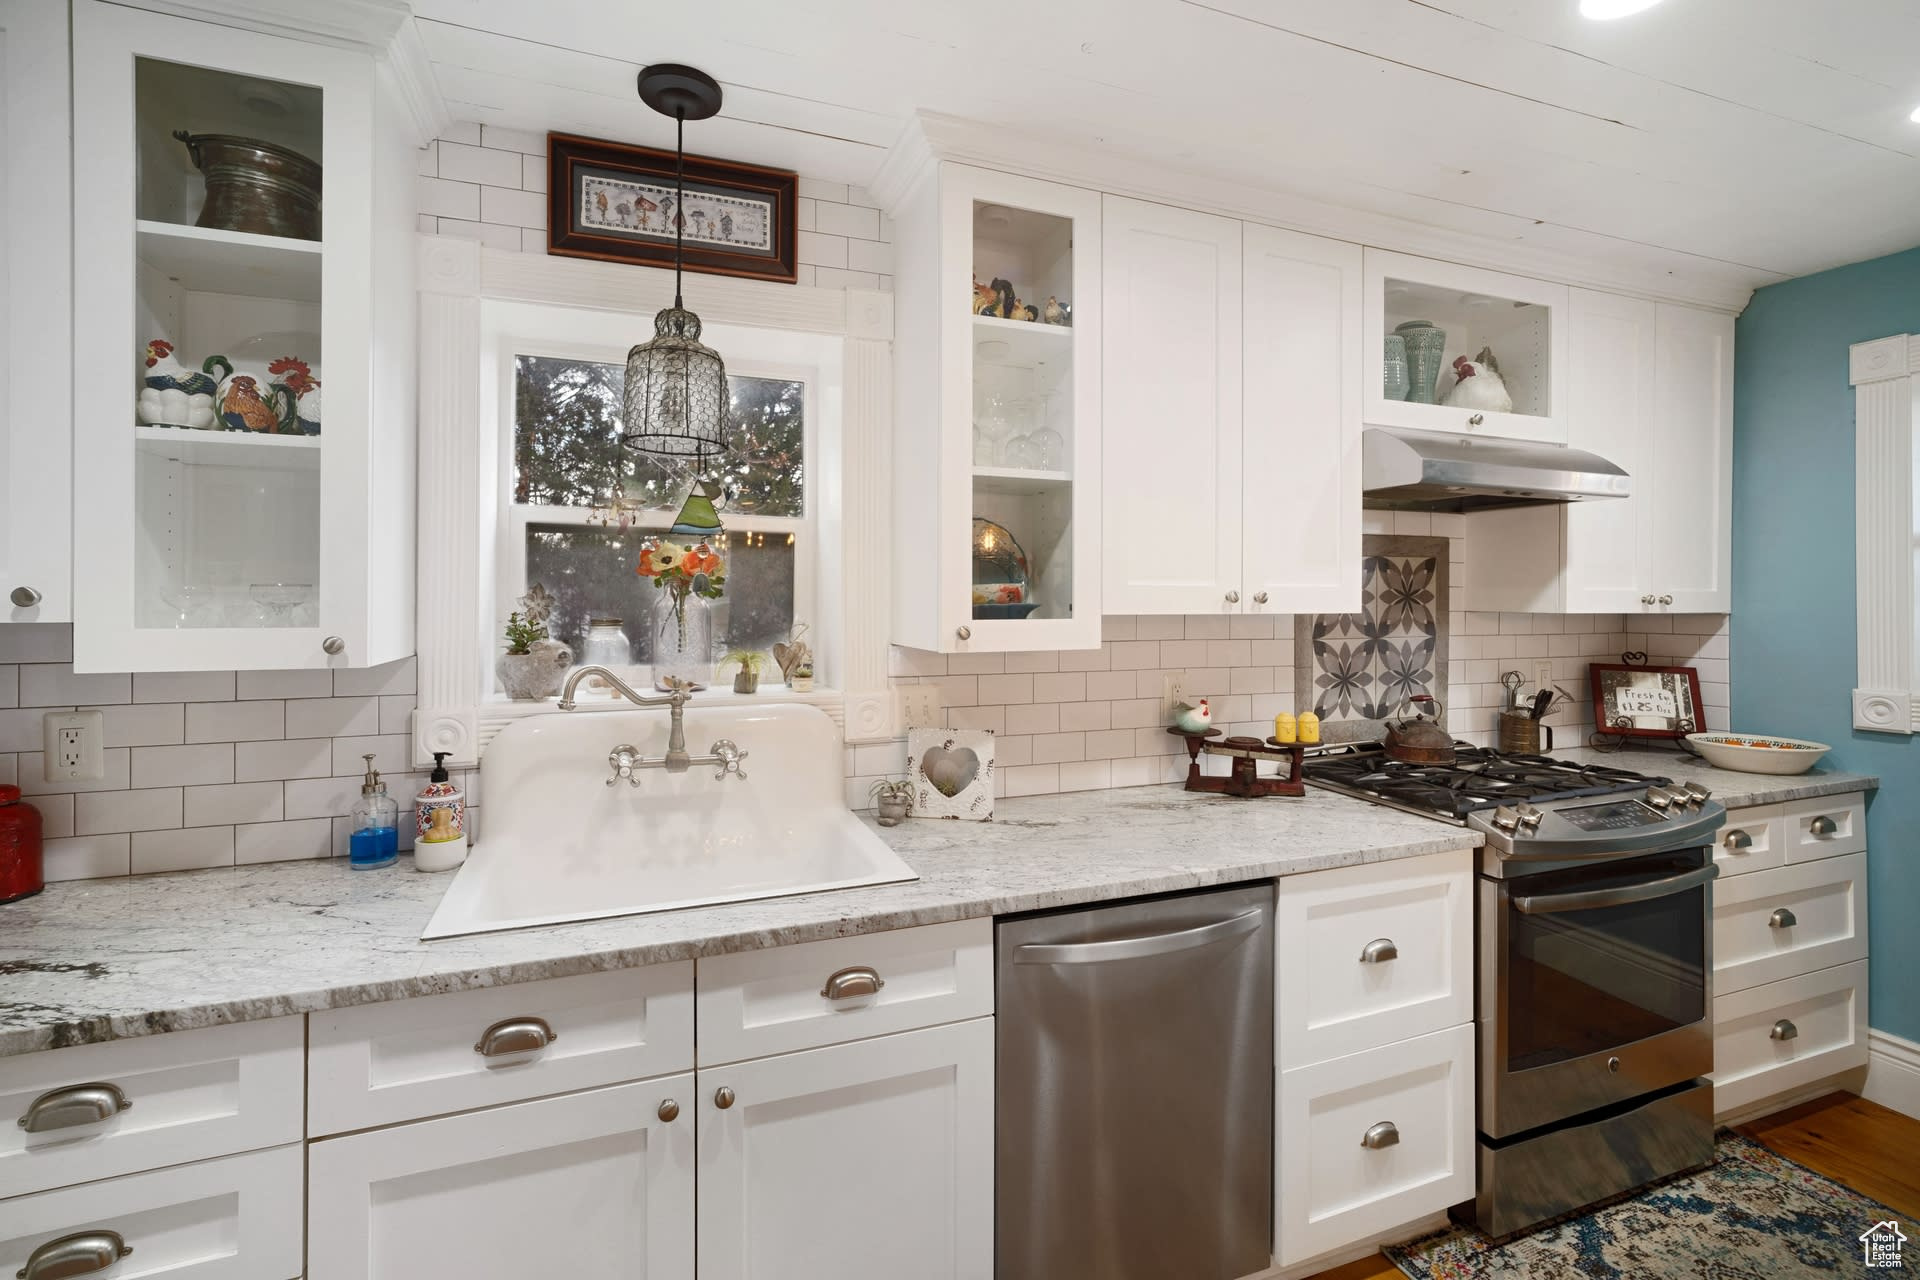 Kitchen with gas range oven, dishwasher, backsplash, and decorative light fixtures